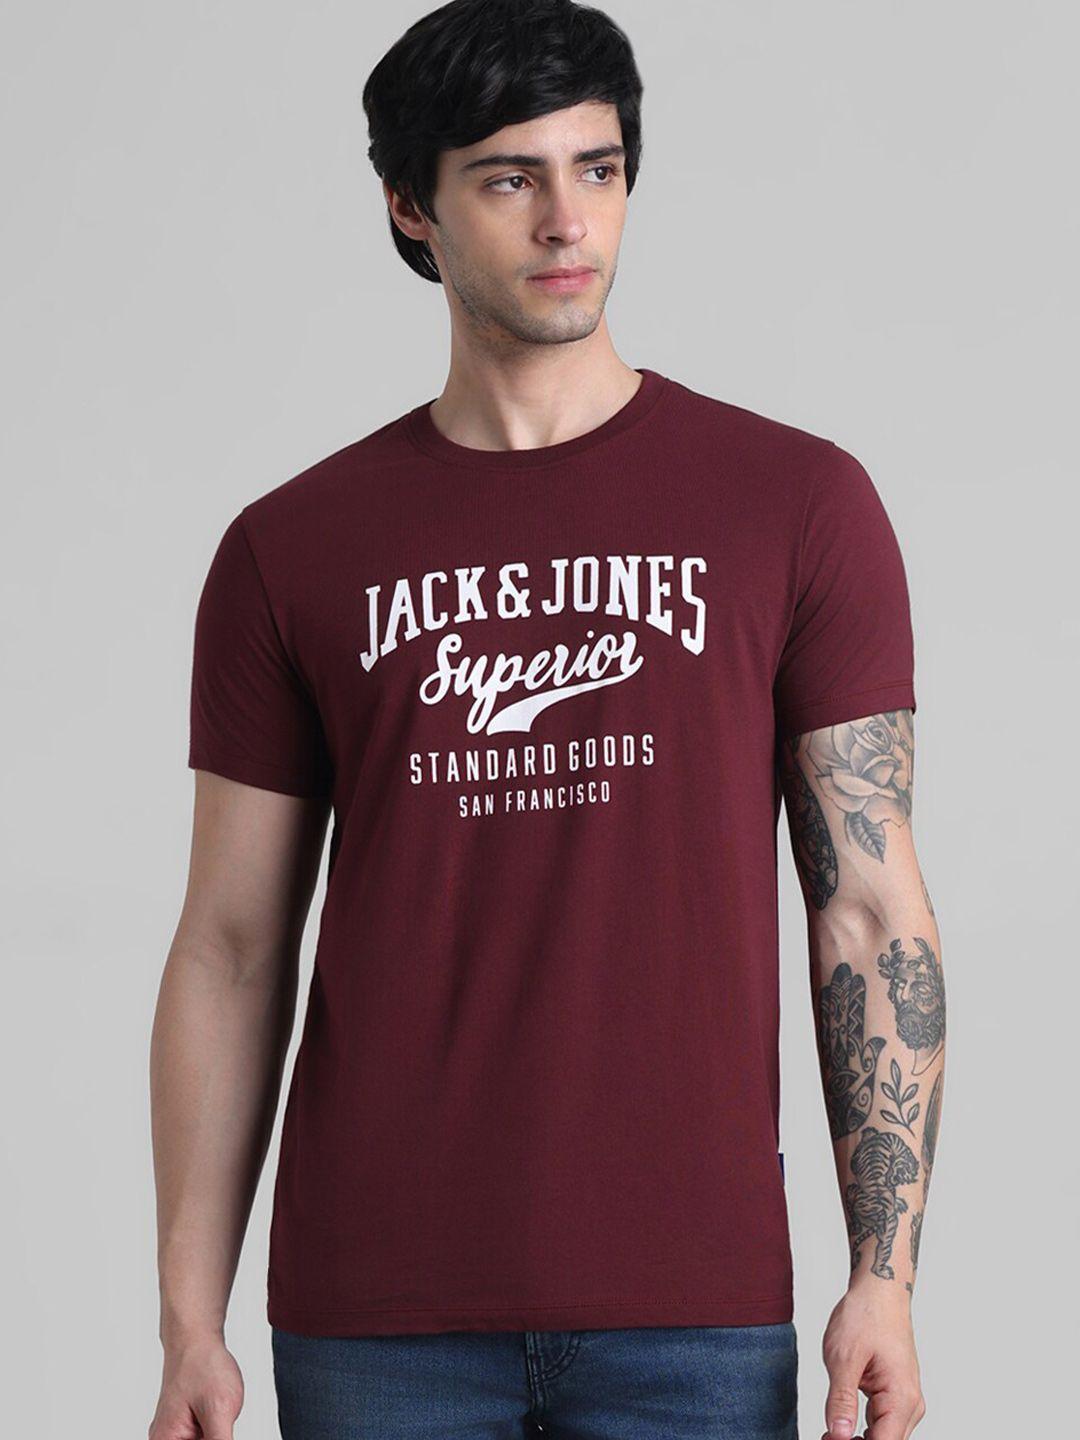 jack & jones typography printed round neck slim fit t-shirt